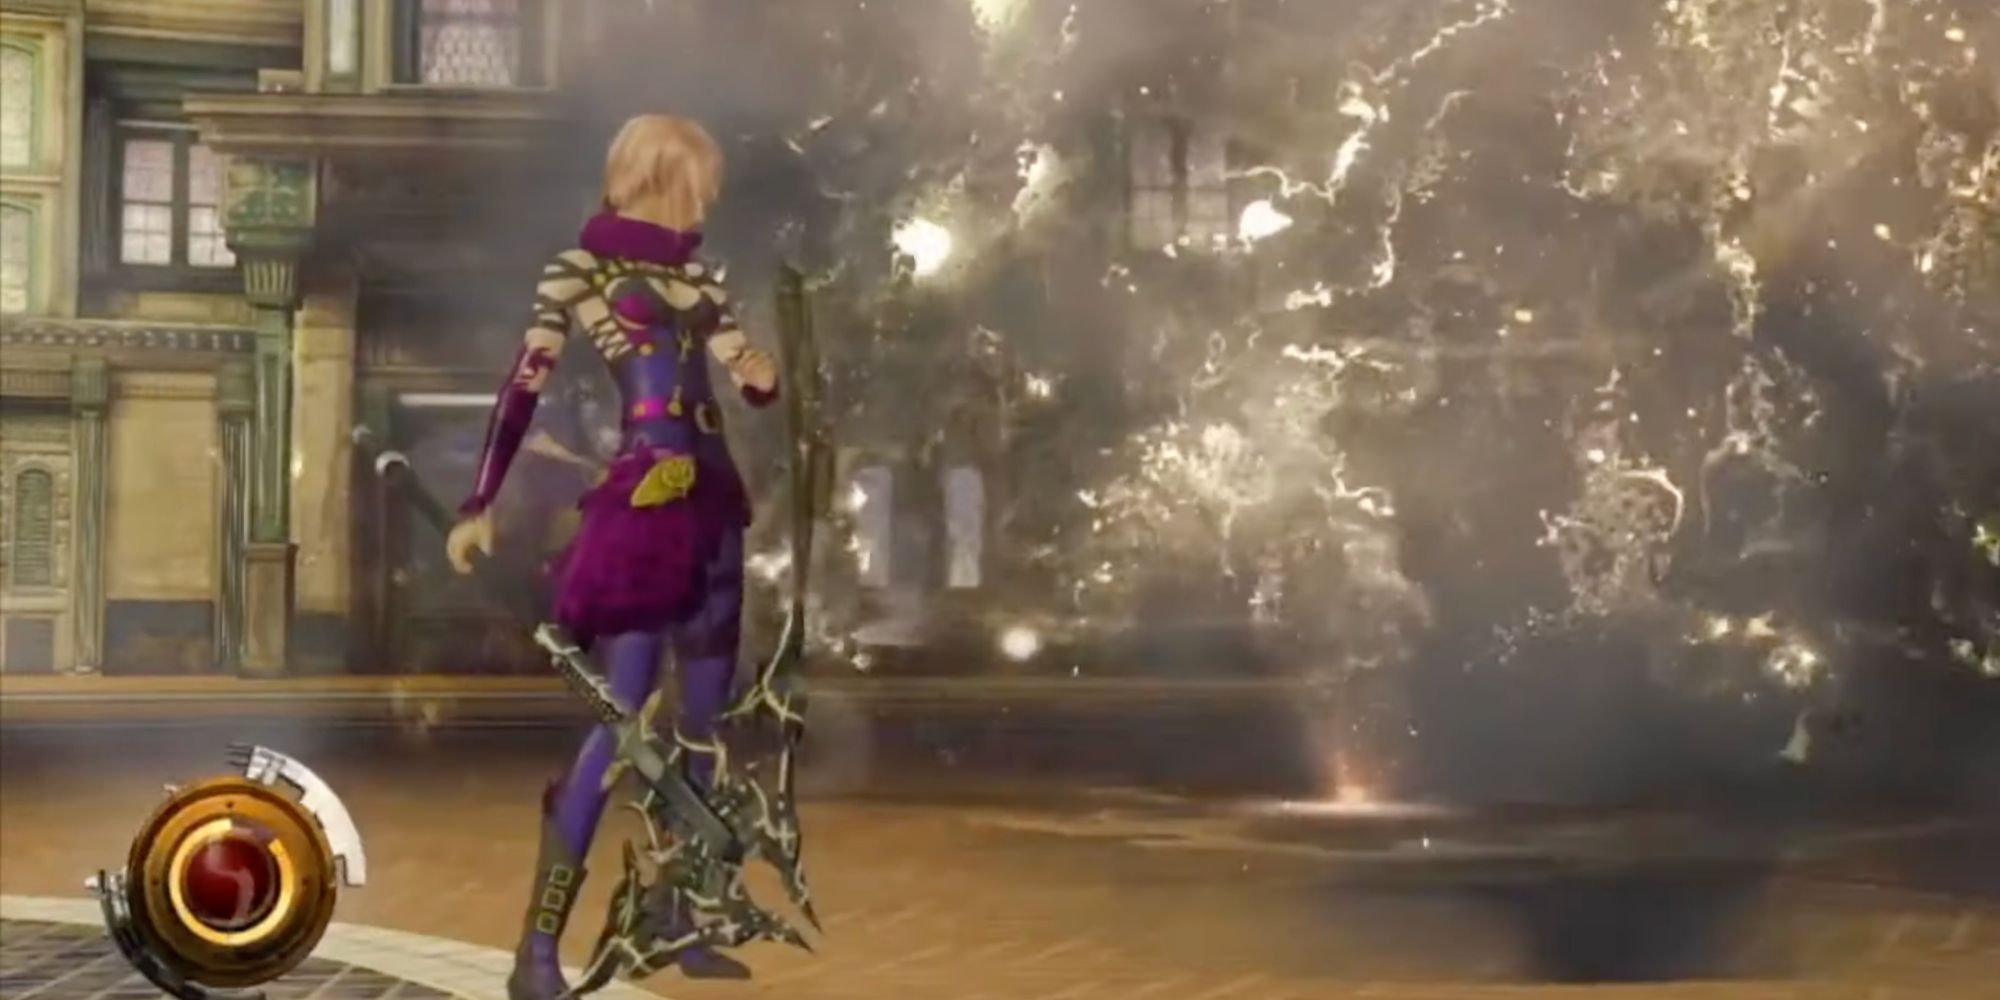 Lightning poses in the Purple Lightning garb after casting a powerful spell in Lightning Returns: Final Fantasy 13